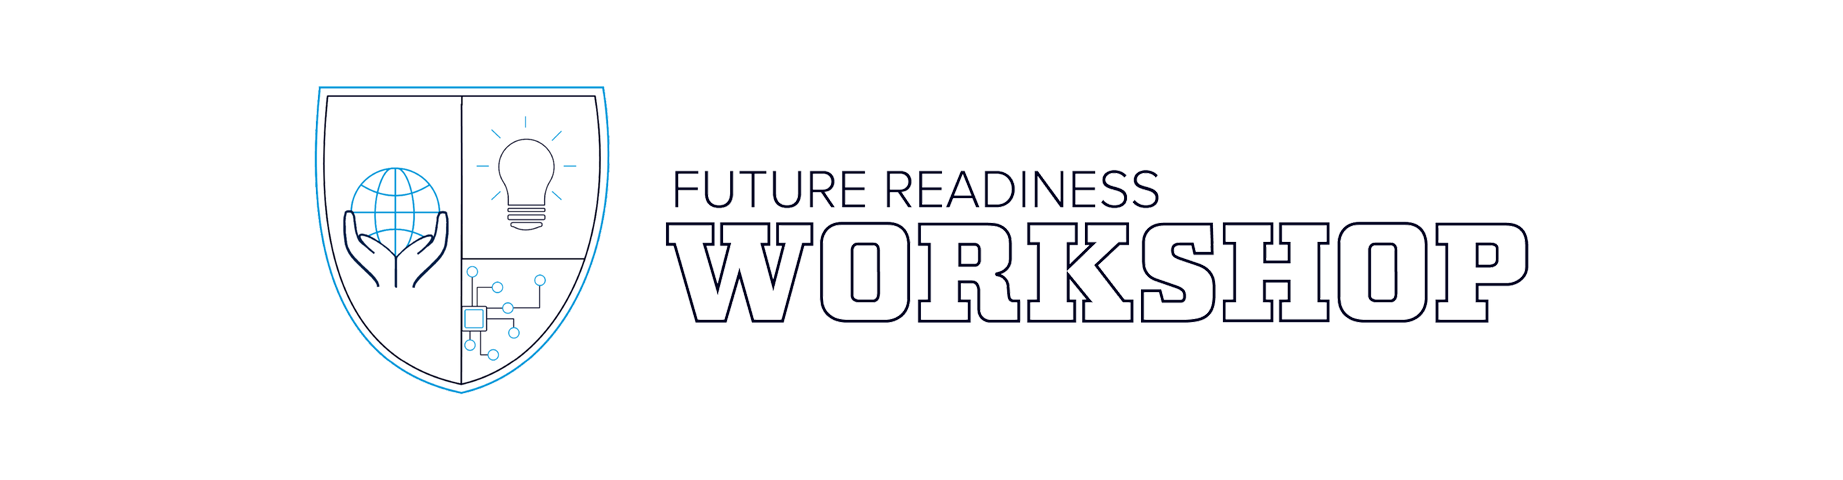 Future Readiness Workshop